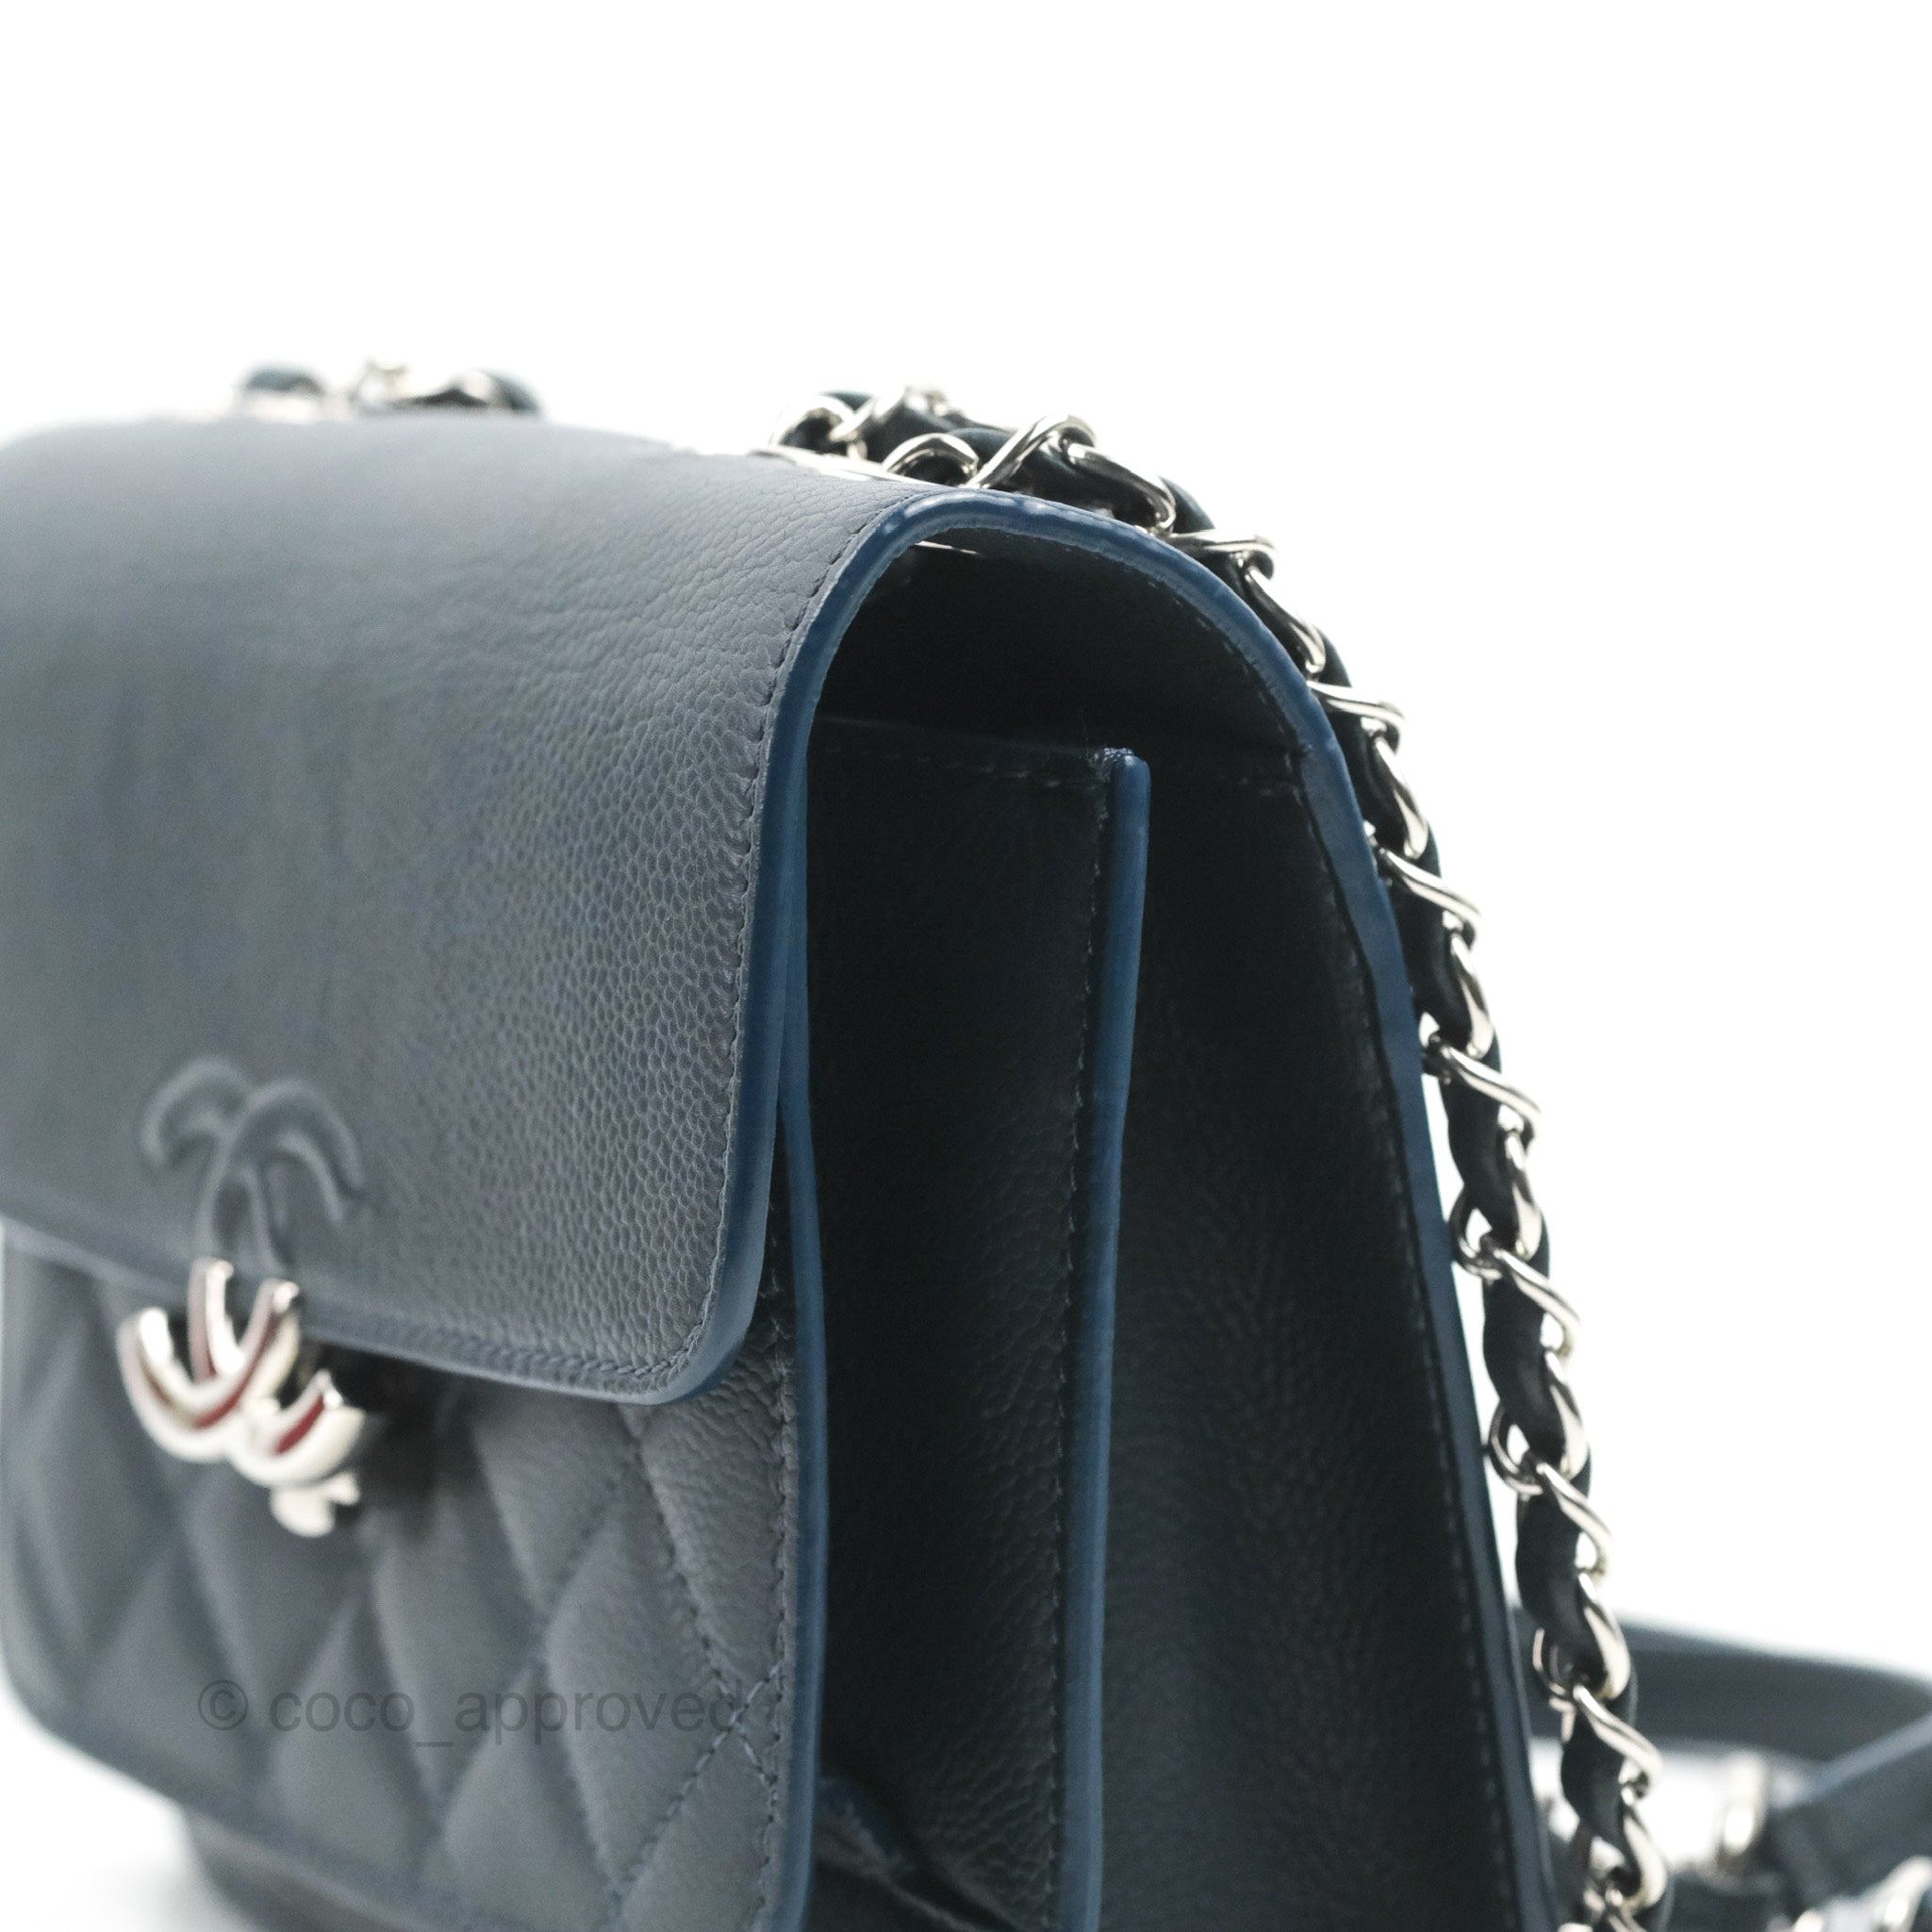 Chanel CC Pocket Small Flap Bag